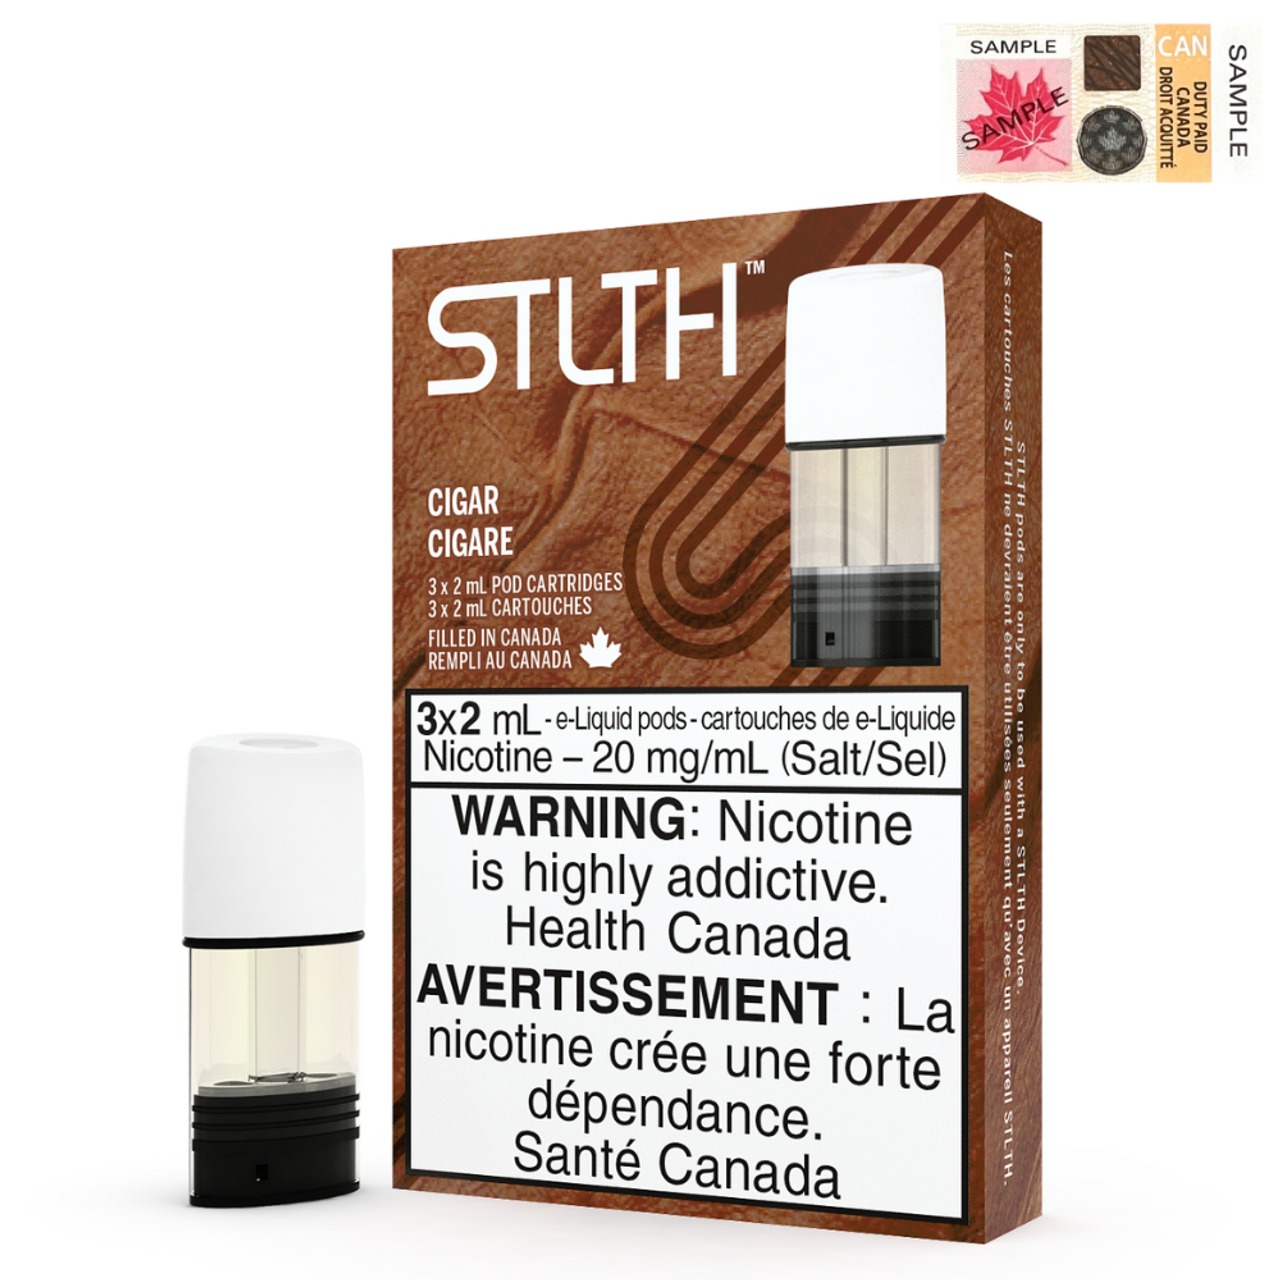 Cigar (Stamped) STLTH Regular Pods Pack of 3 - B.C. Compliance